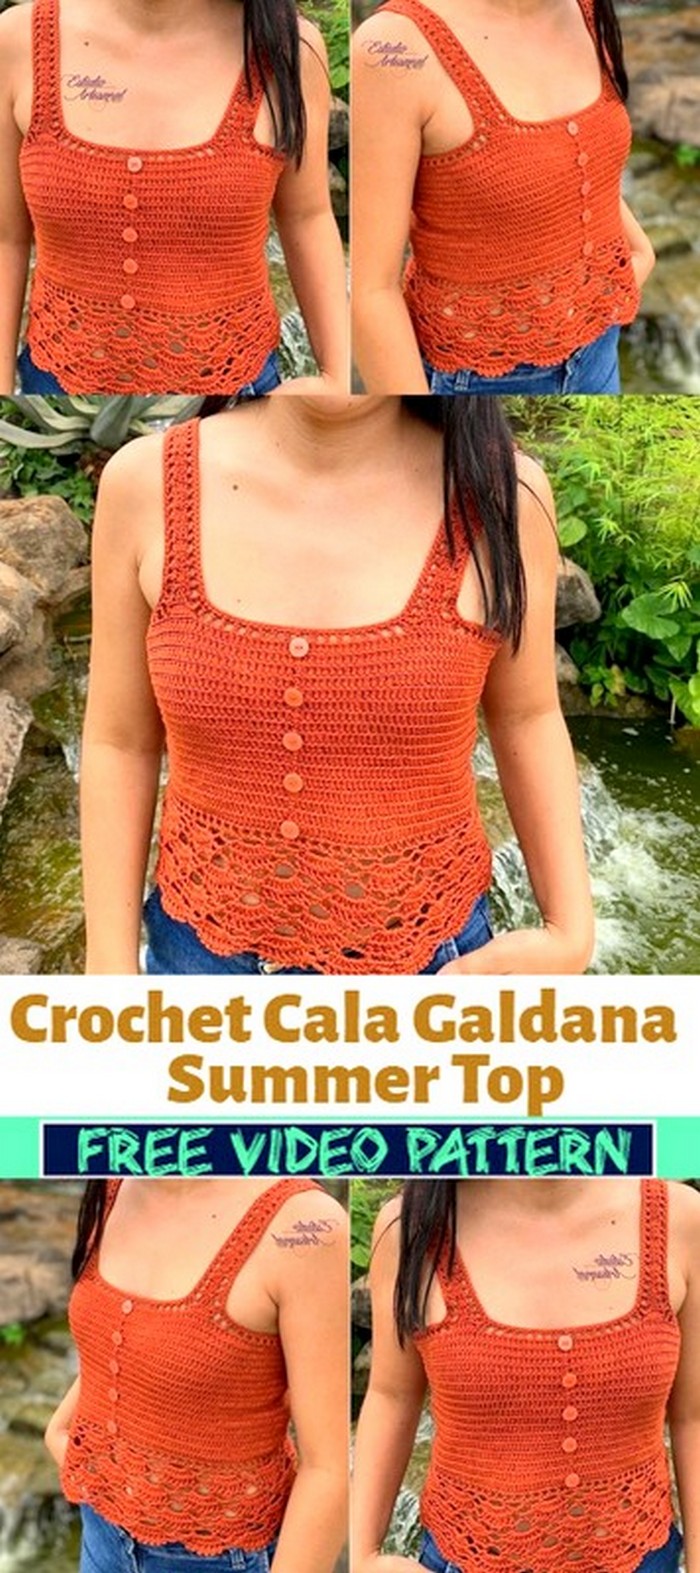 Crochet Cala Galdana Summer Top